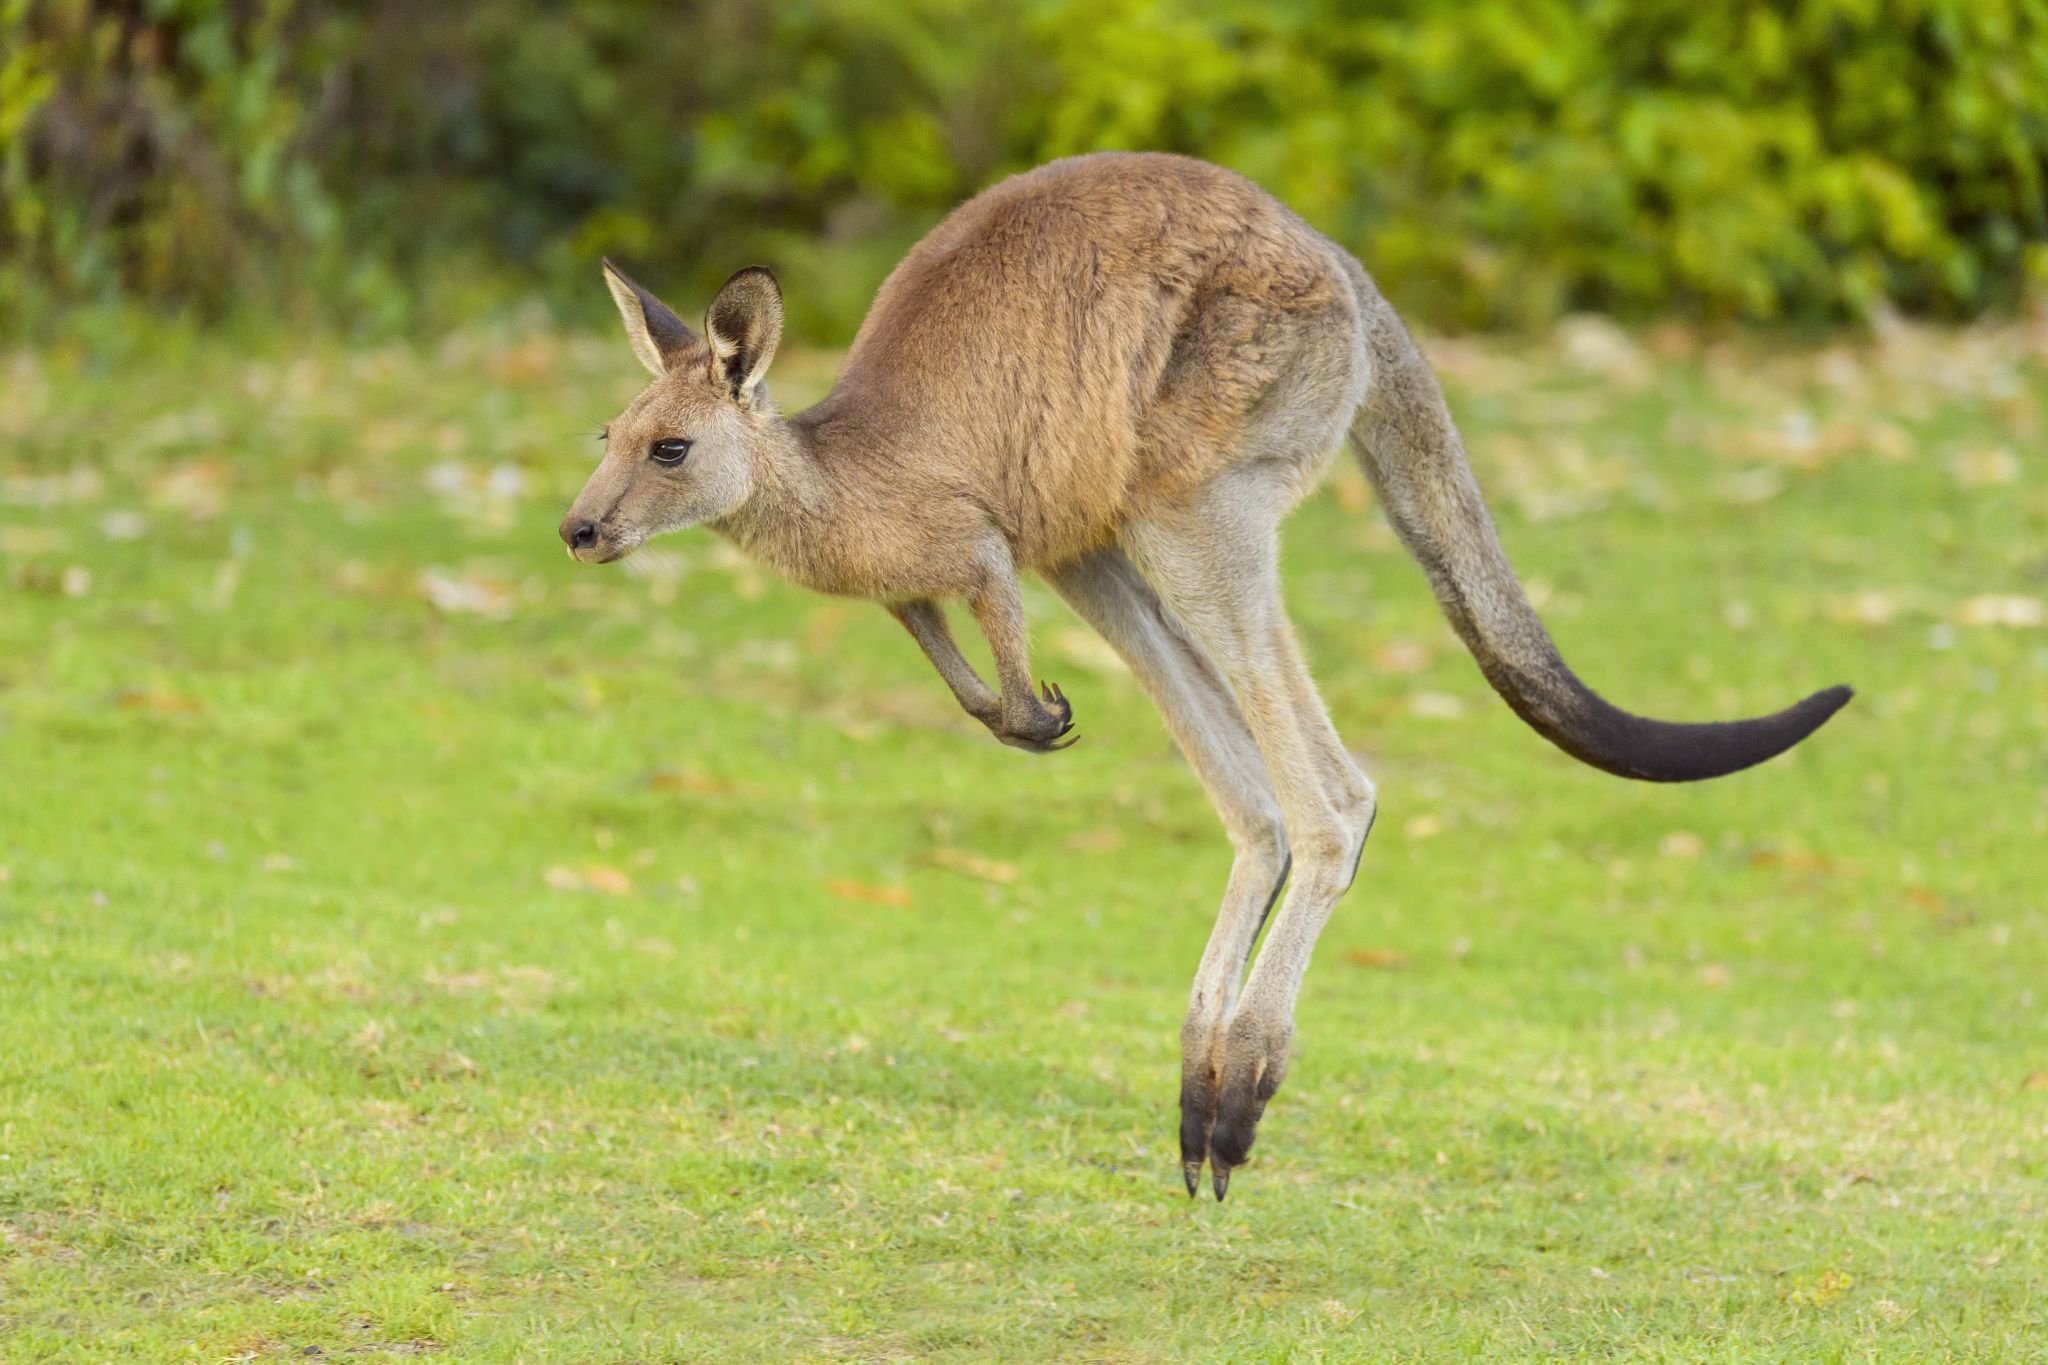 Viral TikTok shows missing kangaroo in RGV